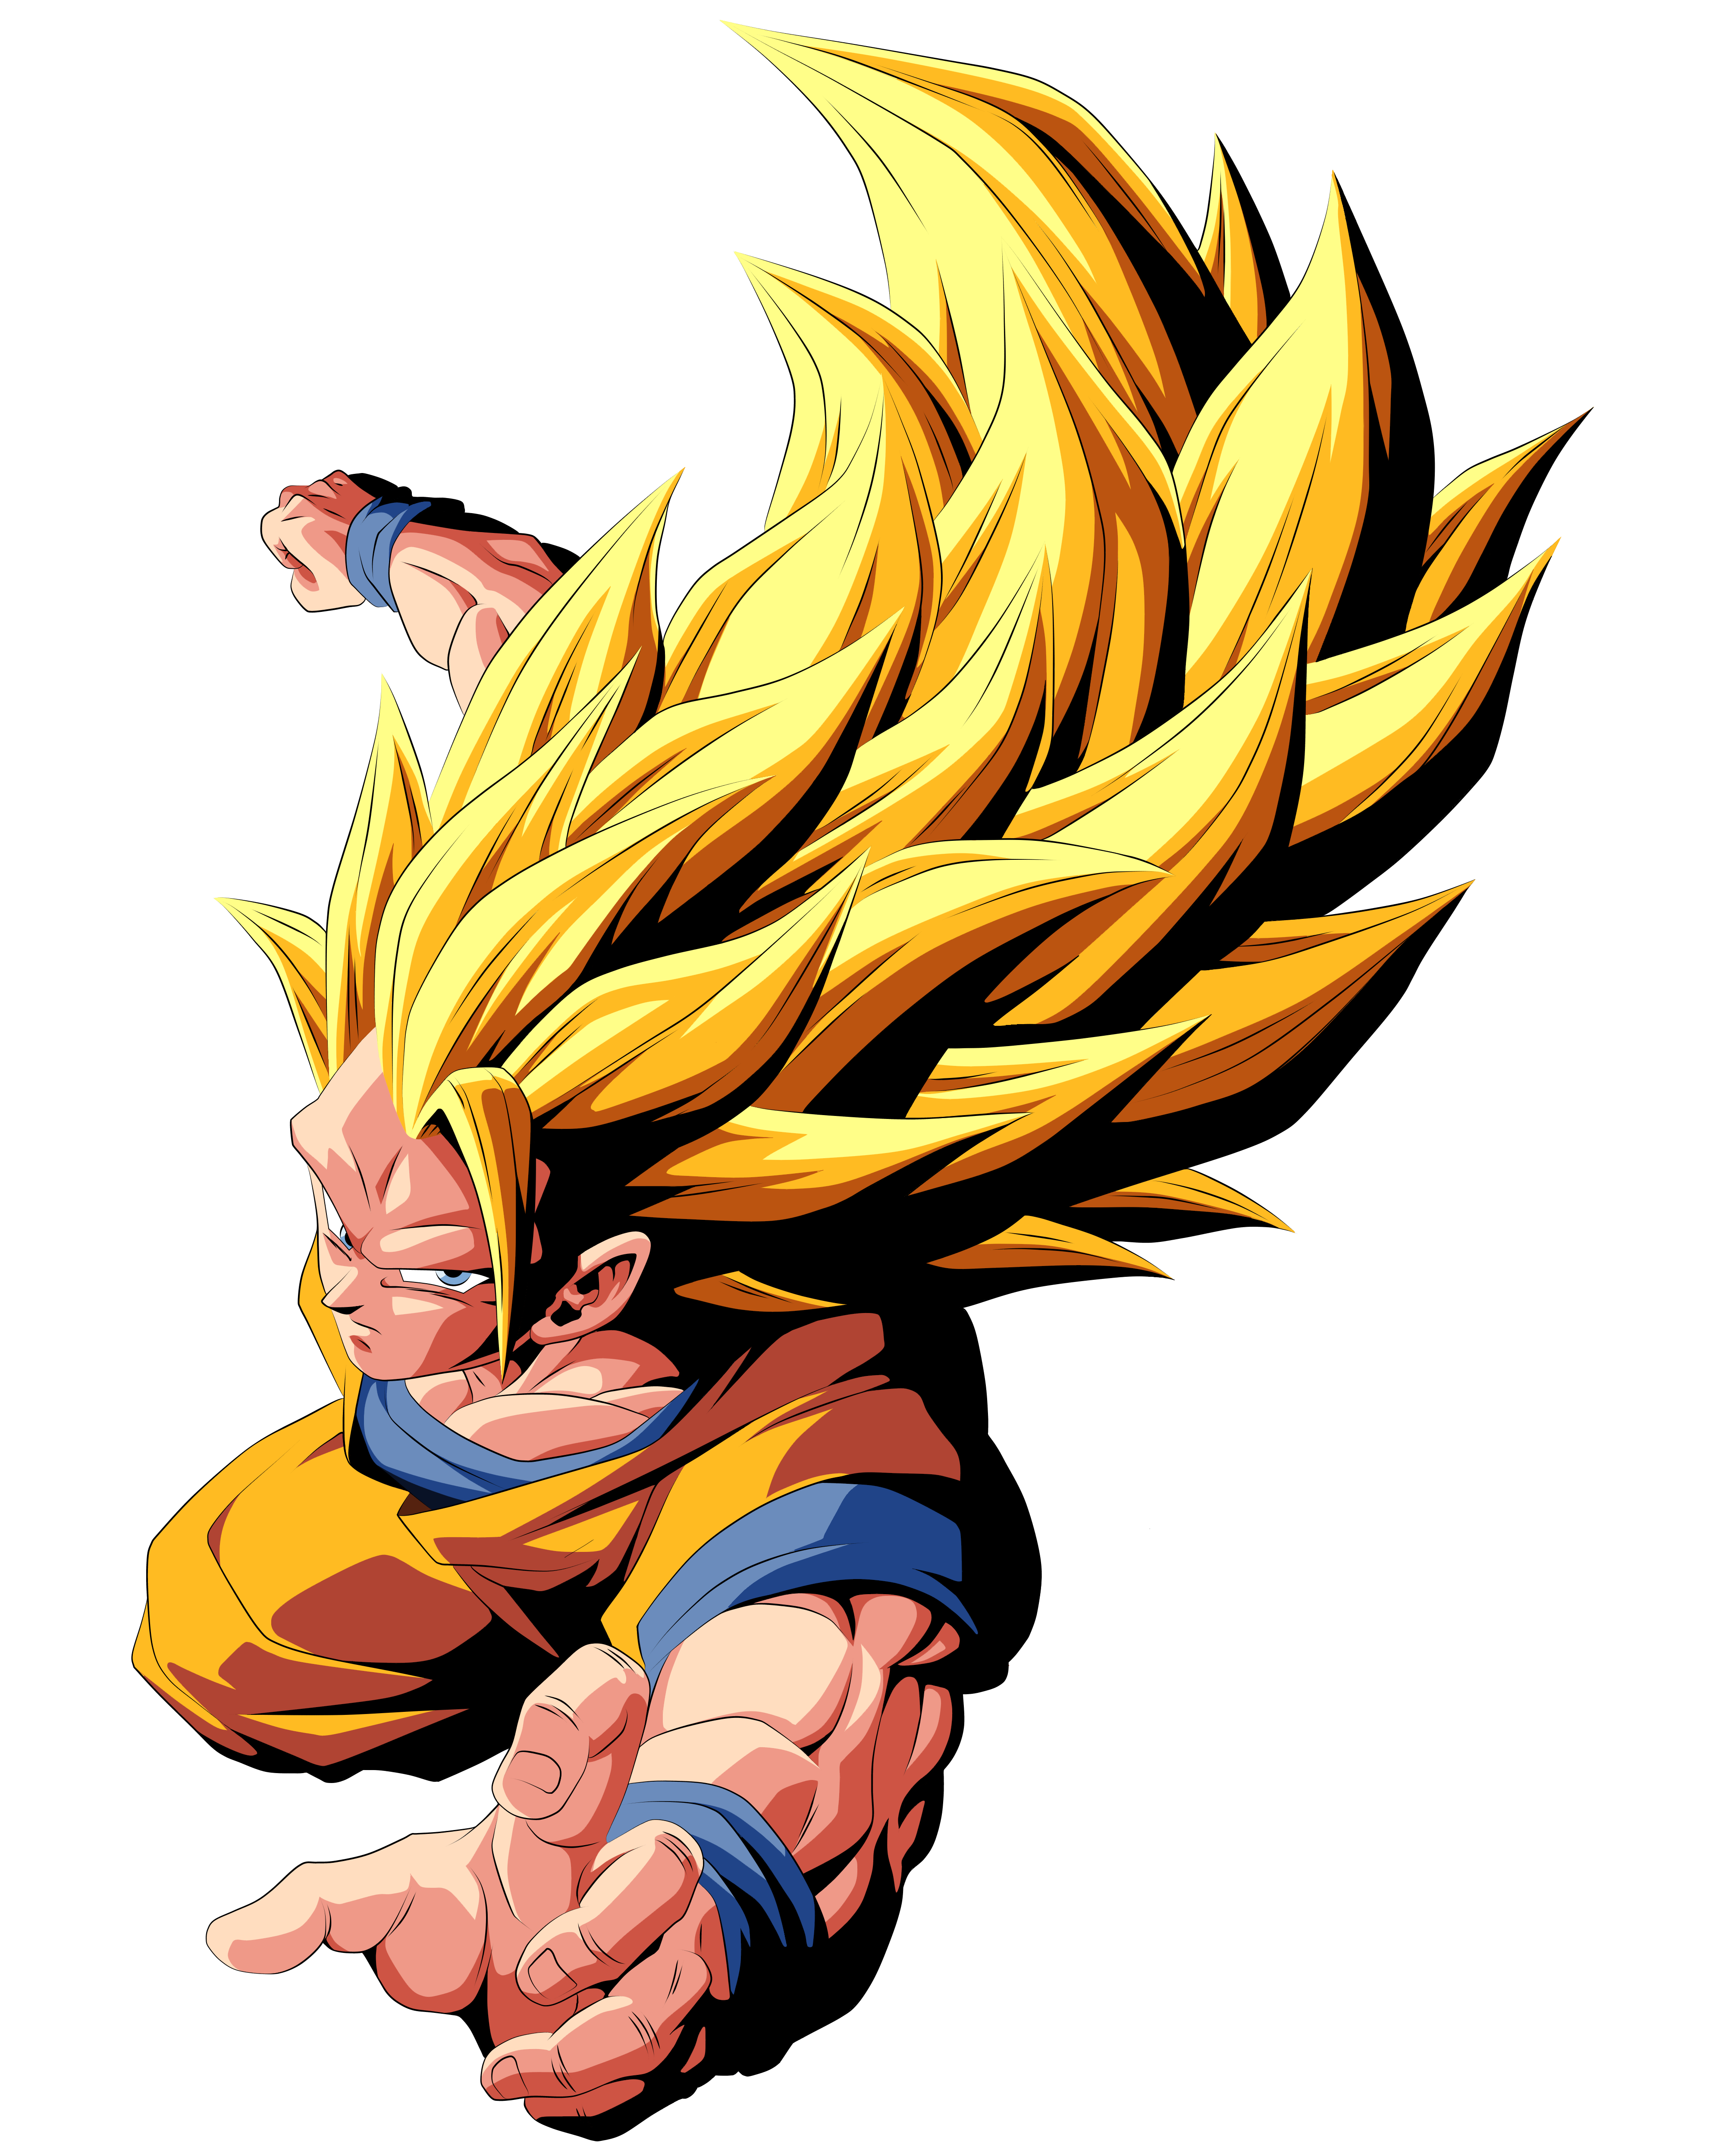 Grand Elder Saiyan: Goku by Xilvor on DeviantArt